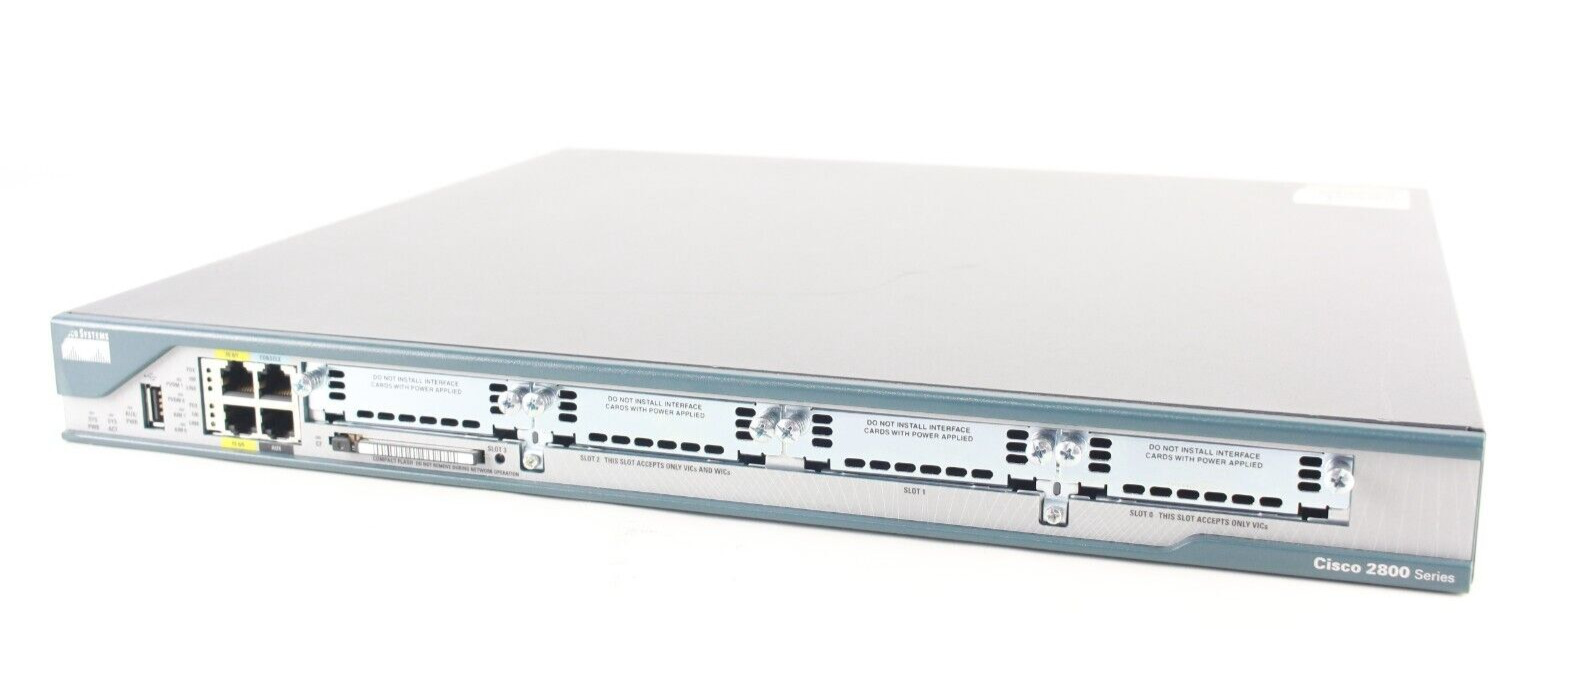 Cisco 2800 Series Integrated Service Router CISCO2801 V04 w/ Flash Card (VS)